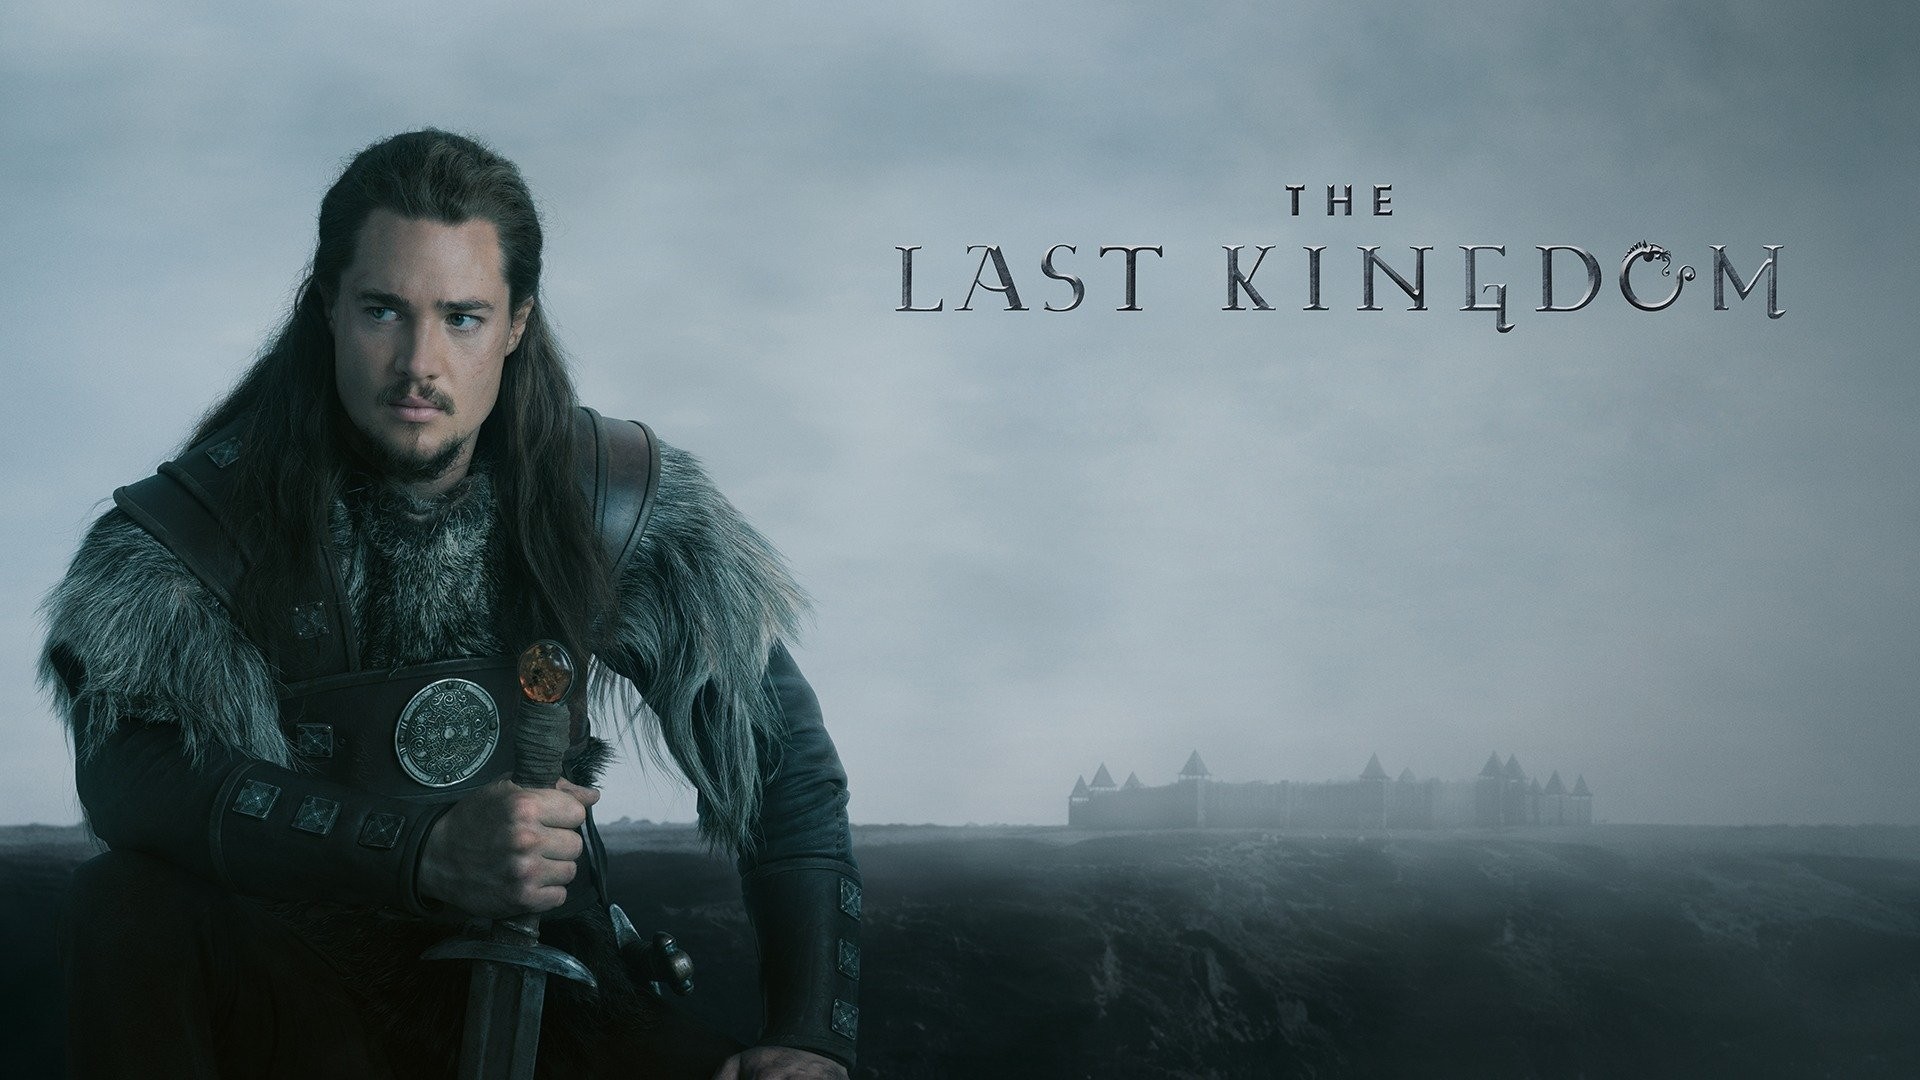 The Last Kingdom: News & Reviews